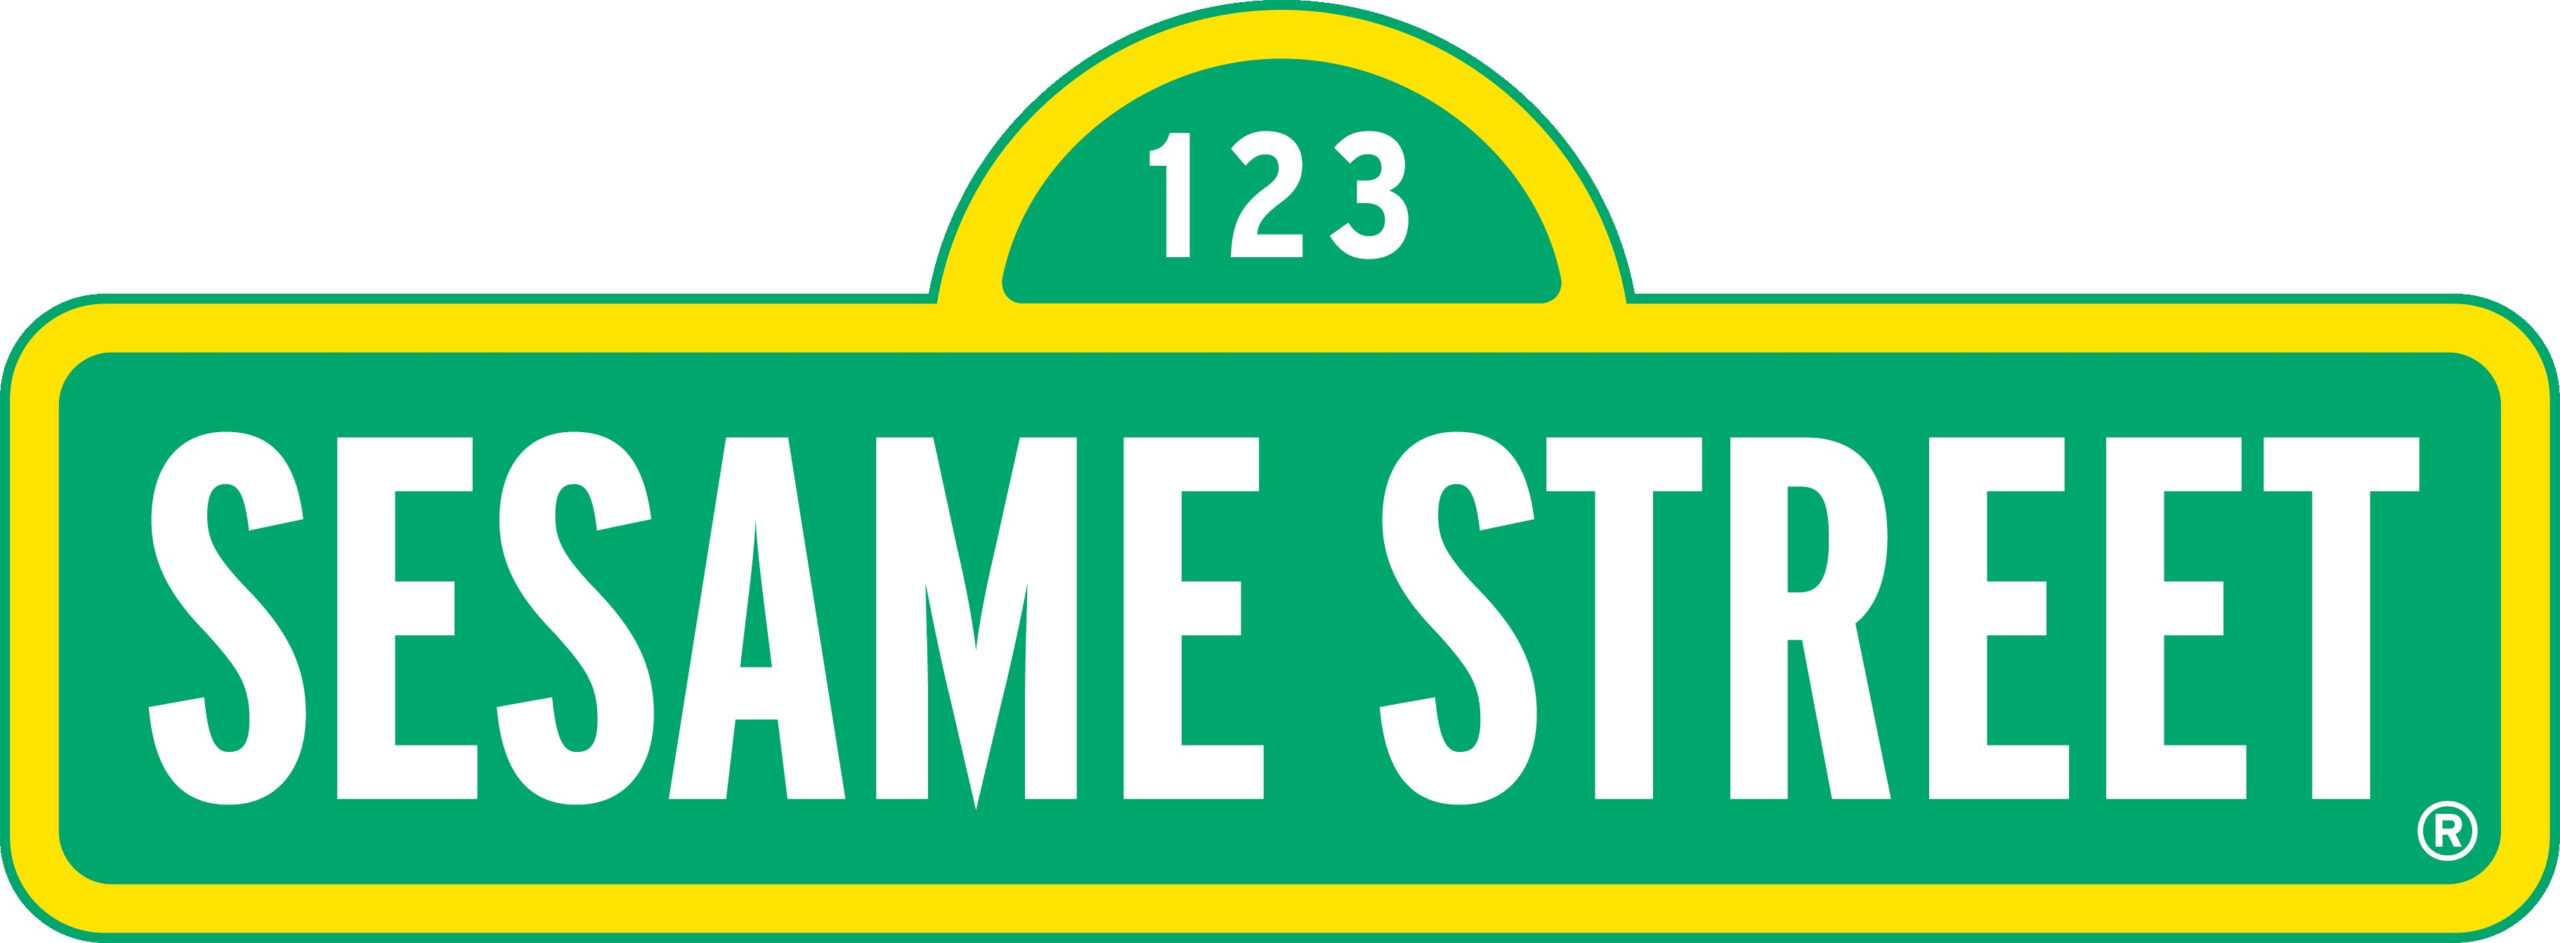 Sesame Street Sign Clipart Within Sesame Street Banner Template